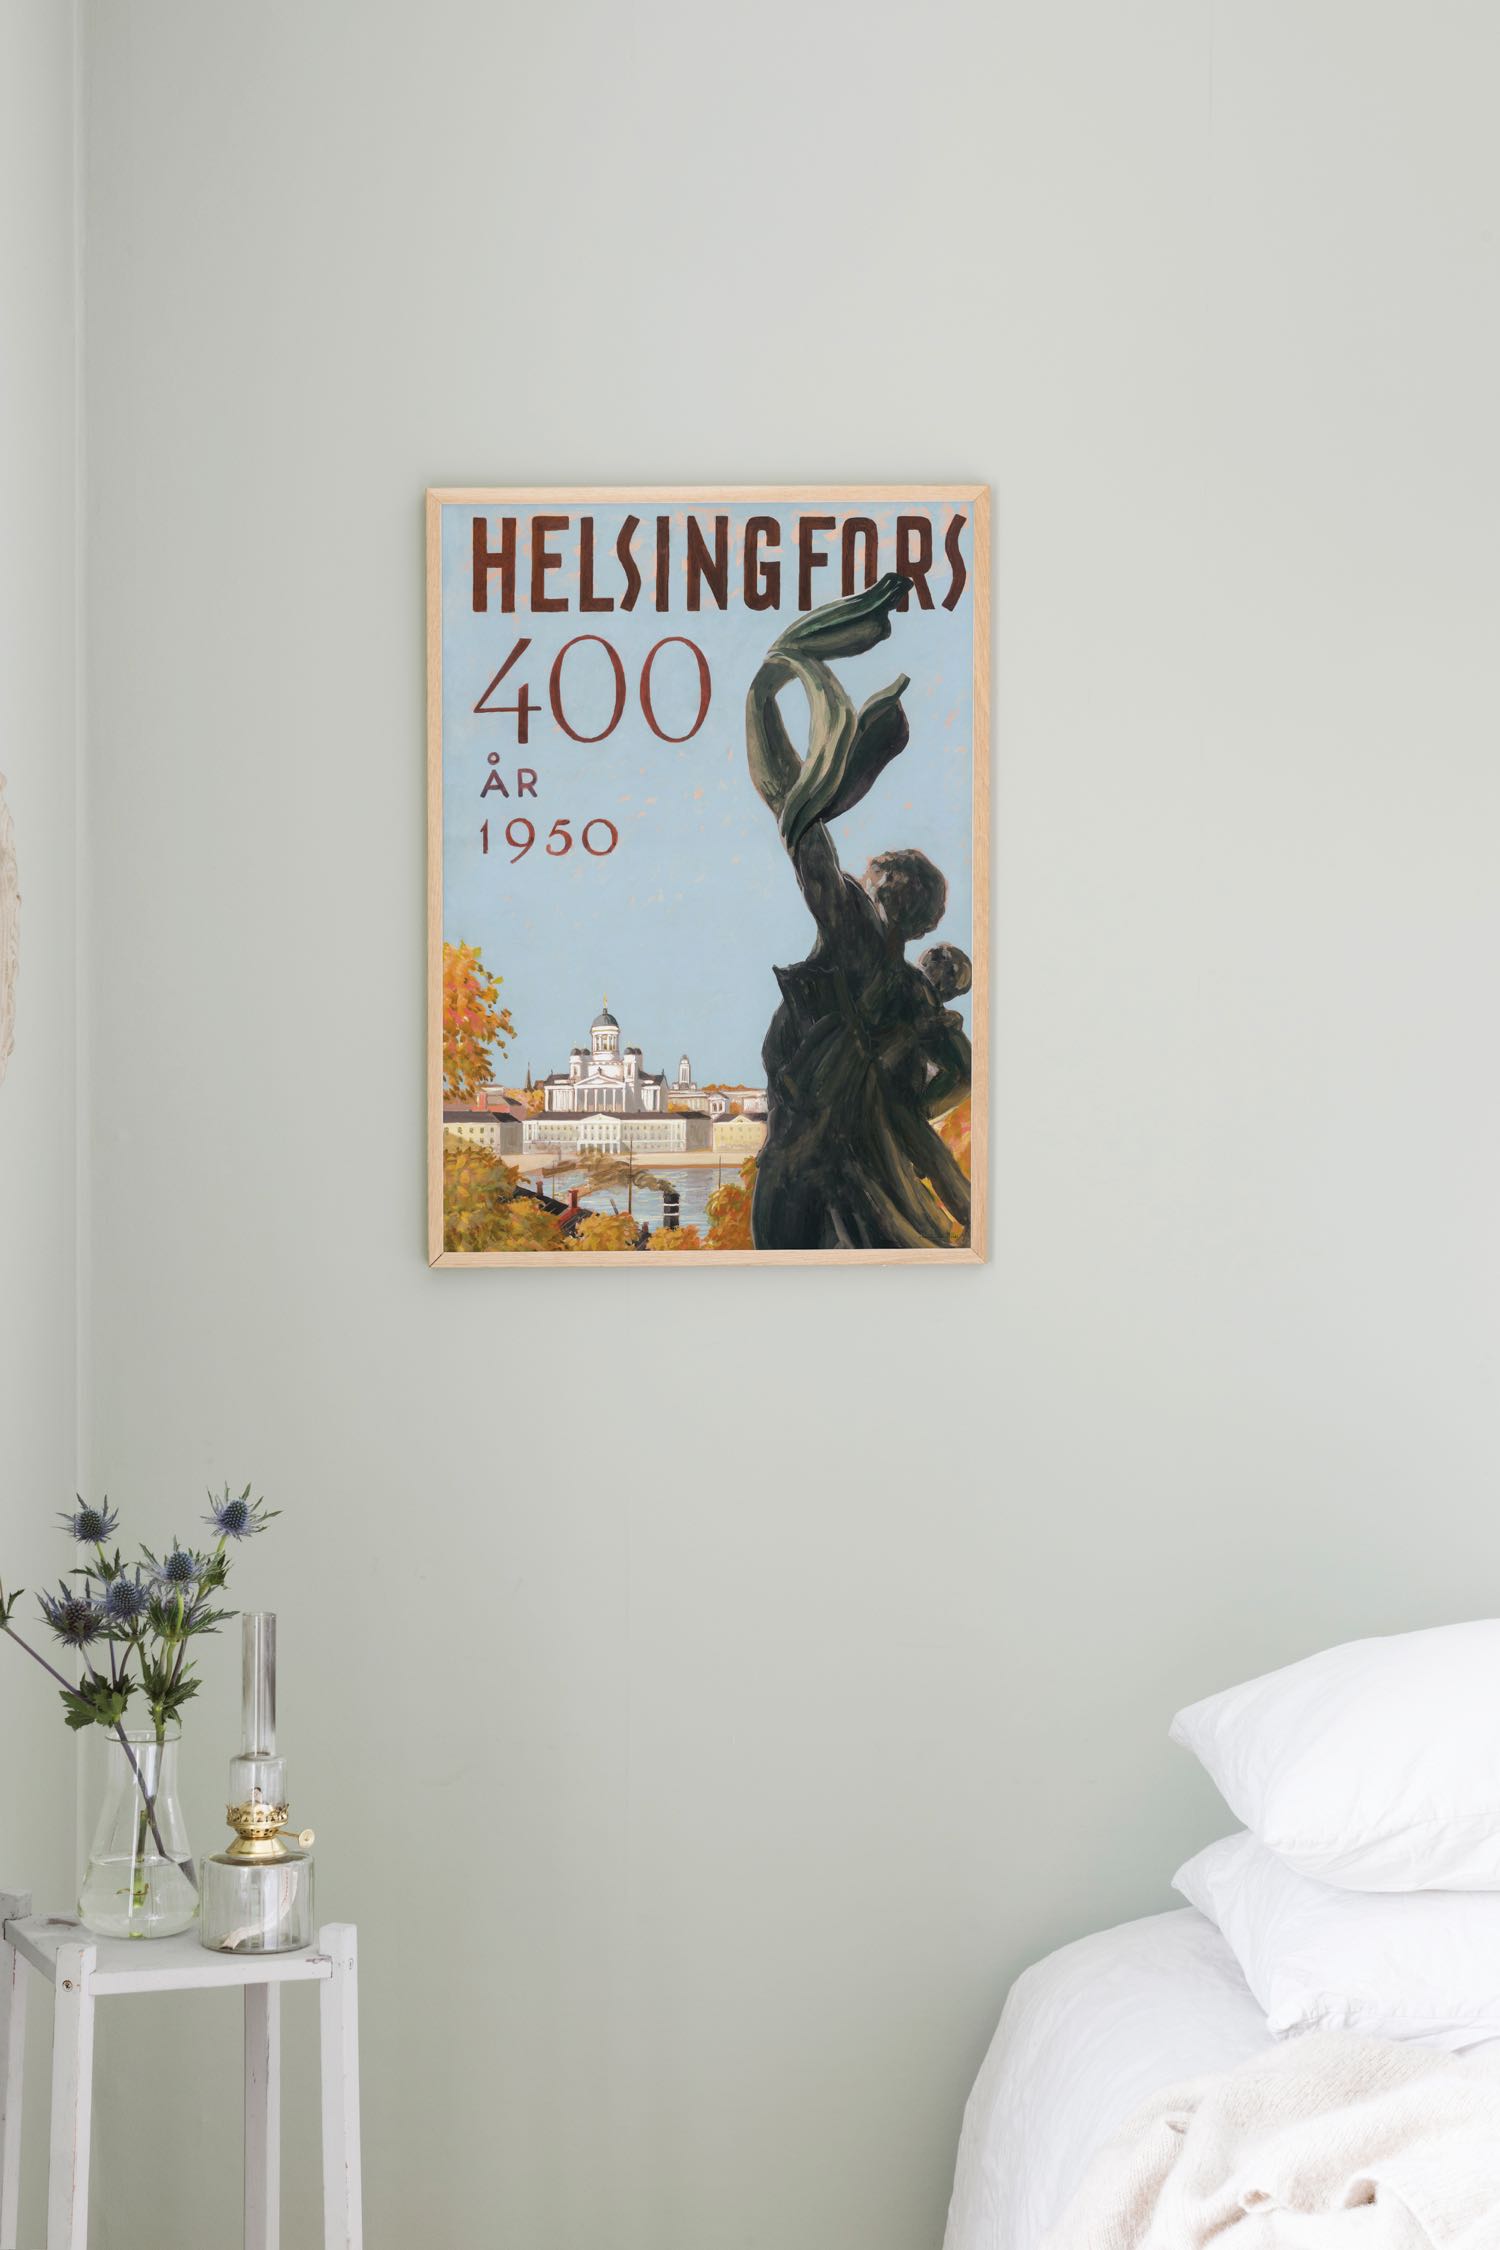 Poster of Helsinki 400 years